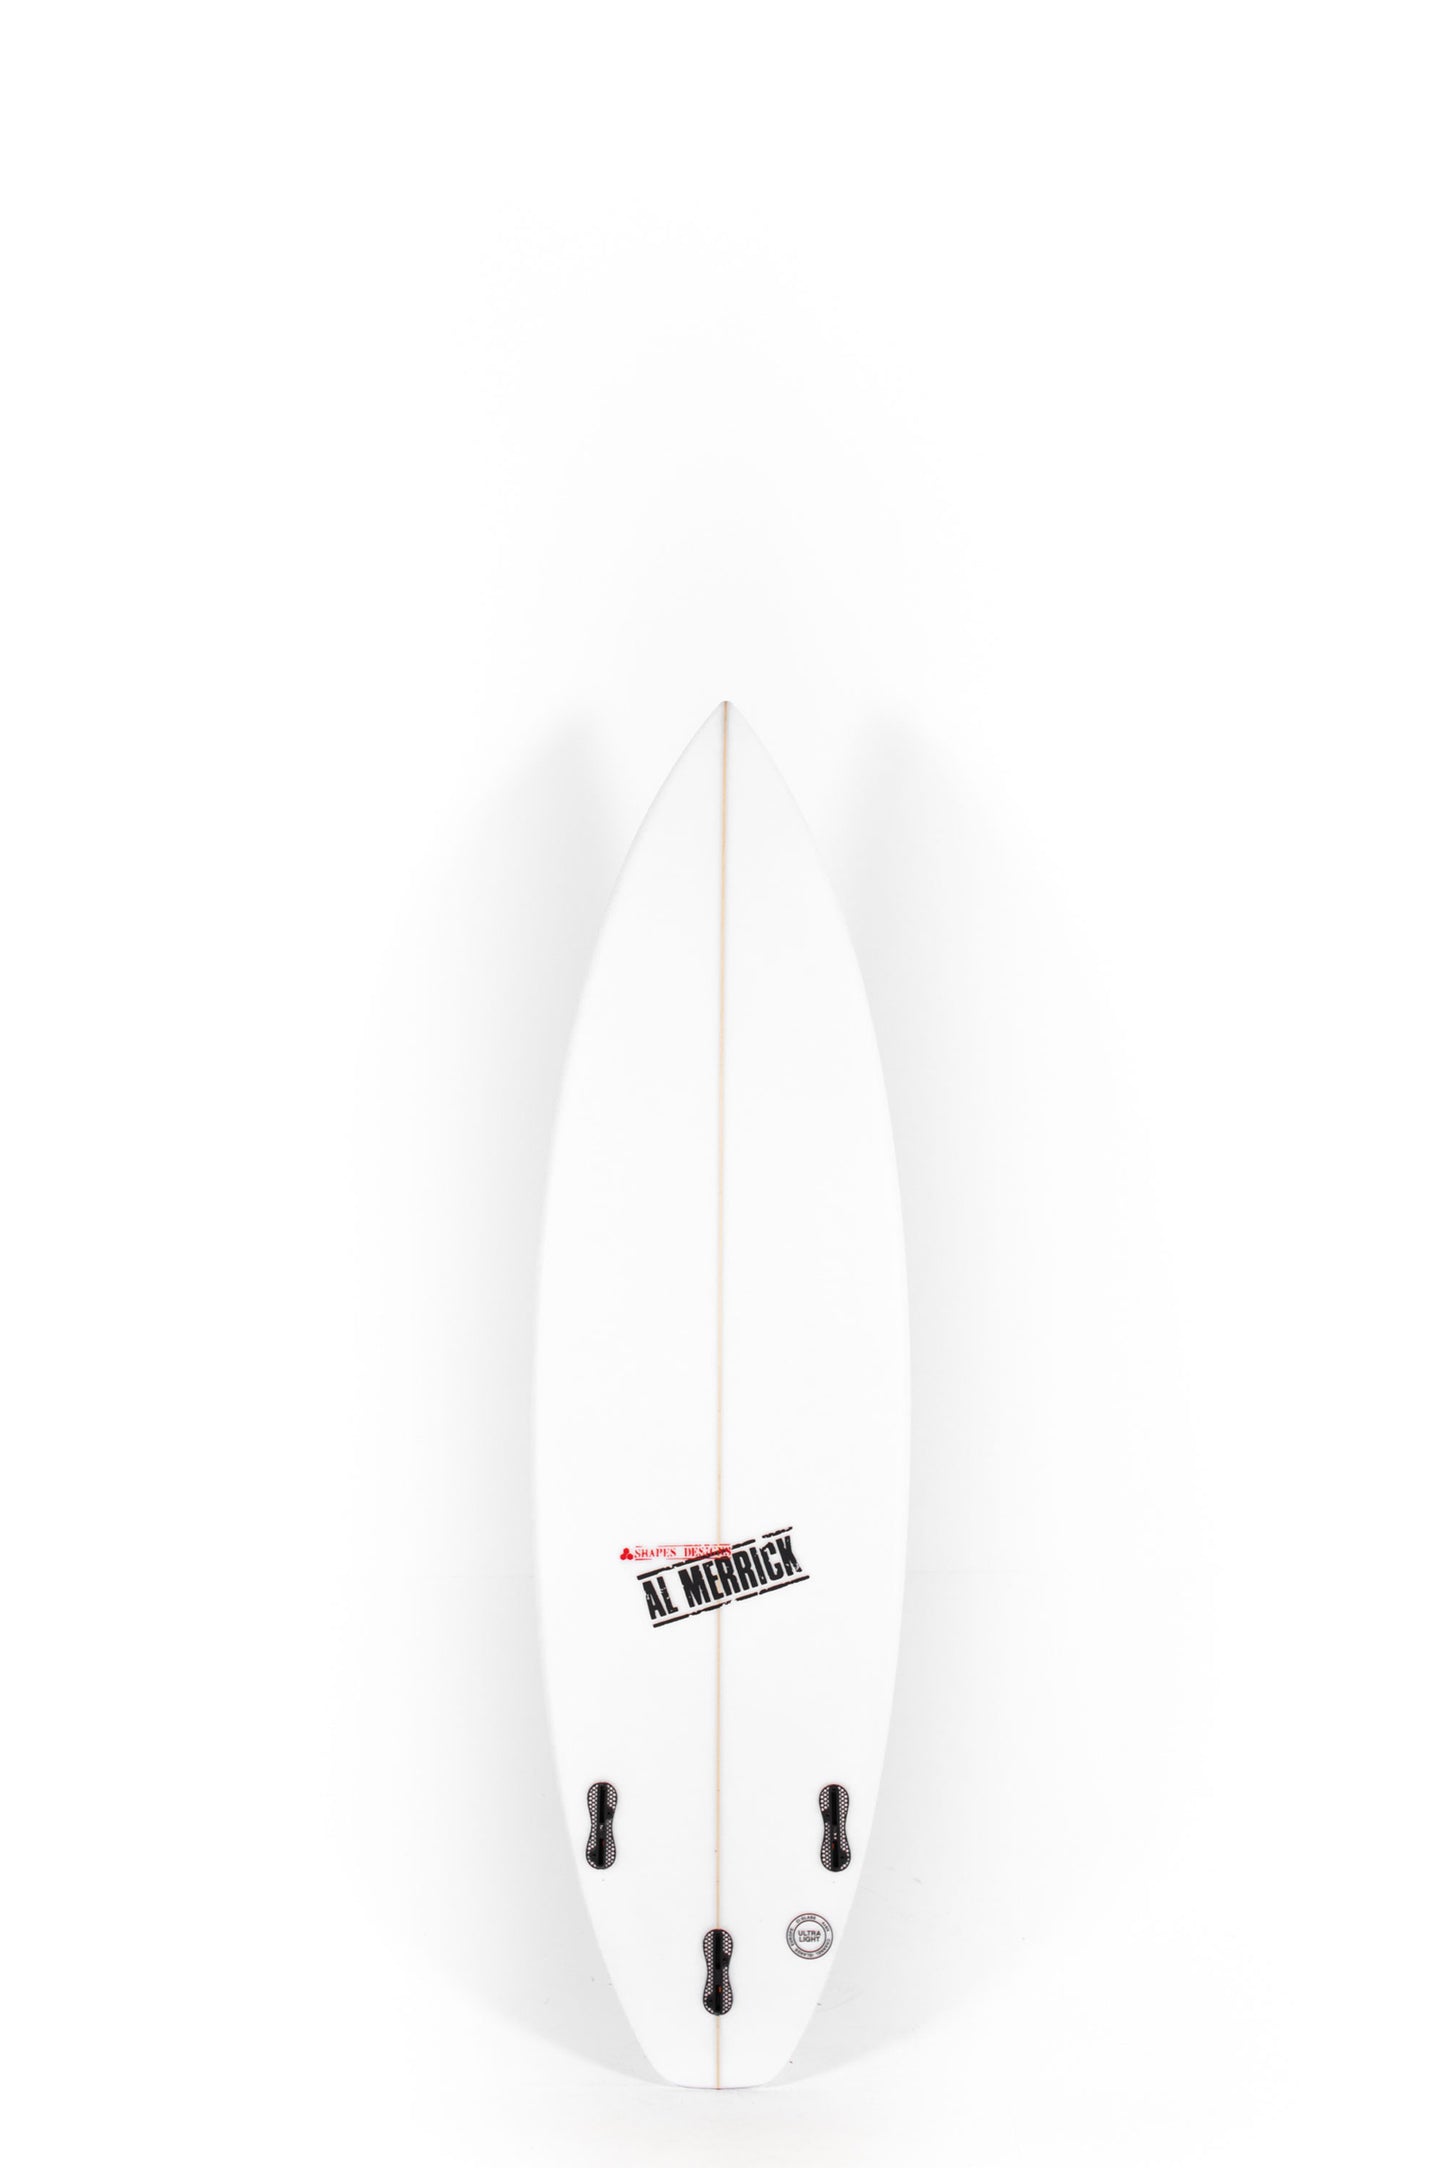 Pukas Surf Shop - Channel Islands - CI PRO by Britt Merrick - 5'10" x 18 5/8 x 2 5/16 - 26.9L - CI22619